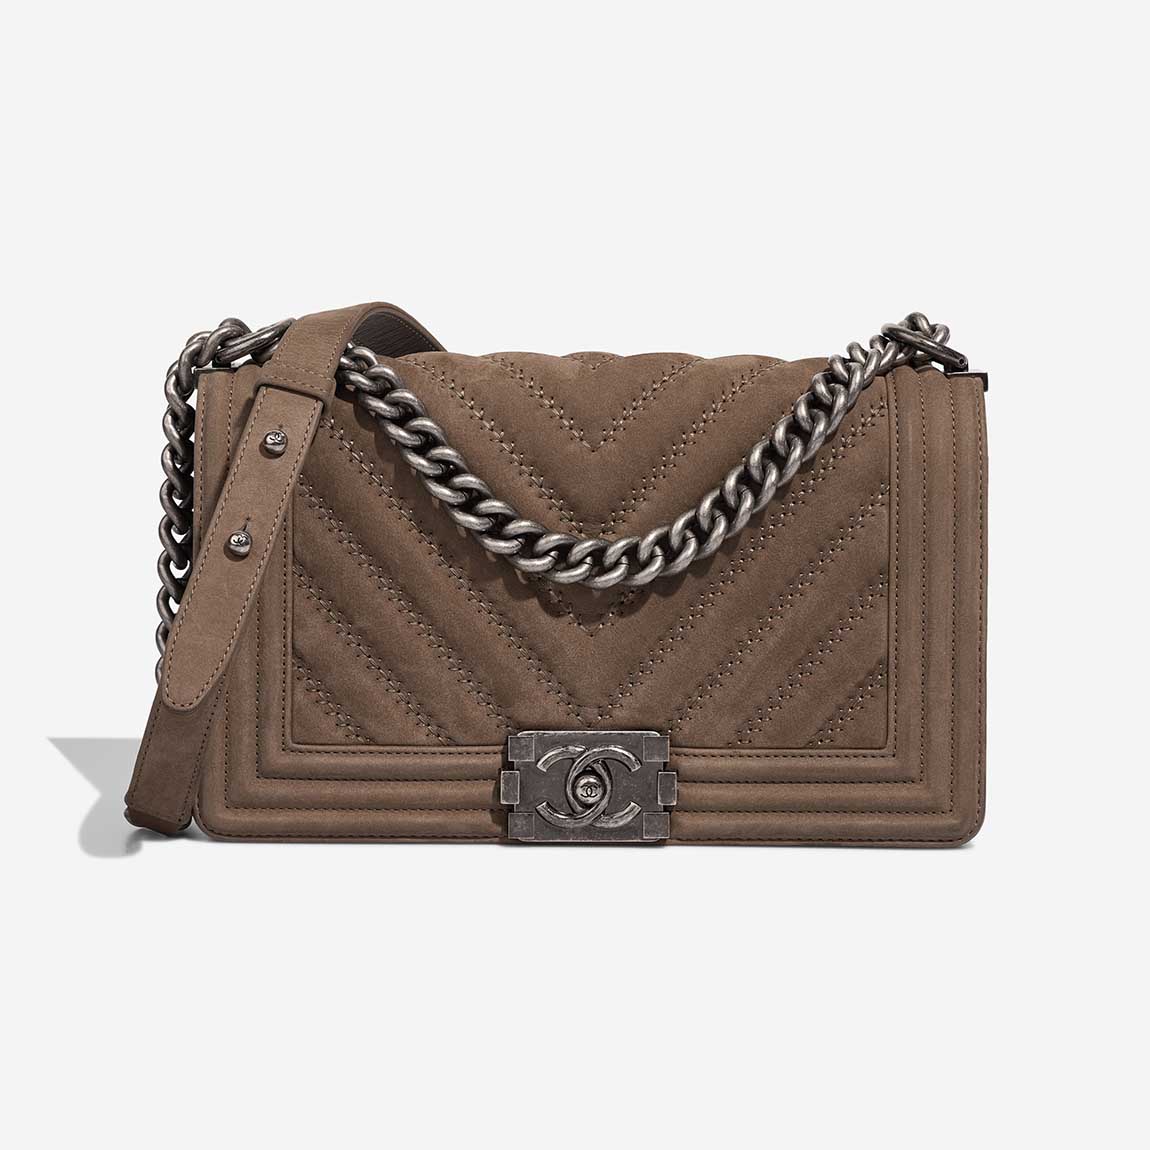 Chanel Boy Old Medium Suede Brown Front | Sell your designer bag